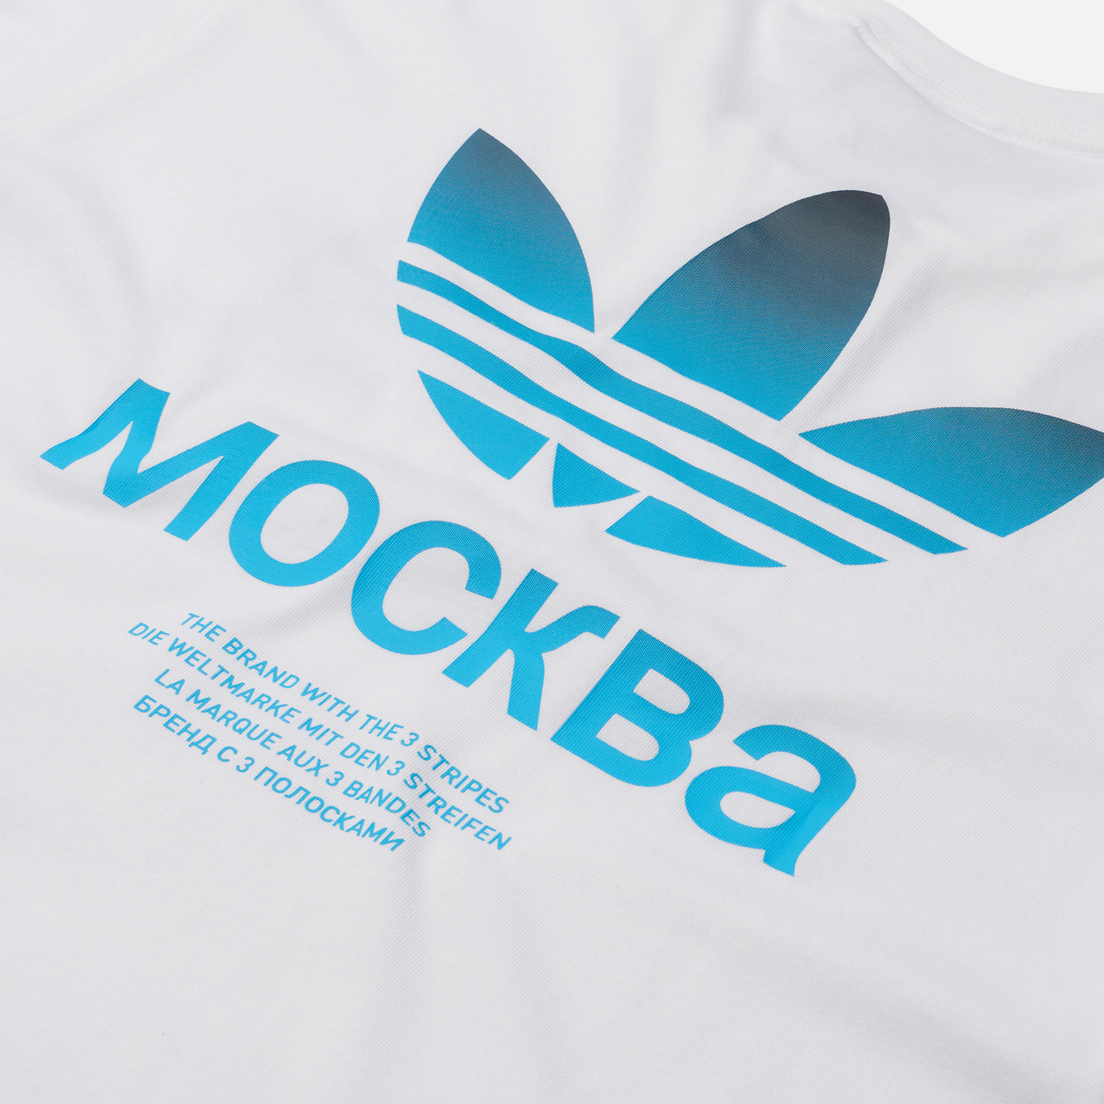 adidas Originals Мужская футболка Moscow Trefoil 2.0